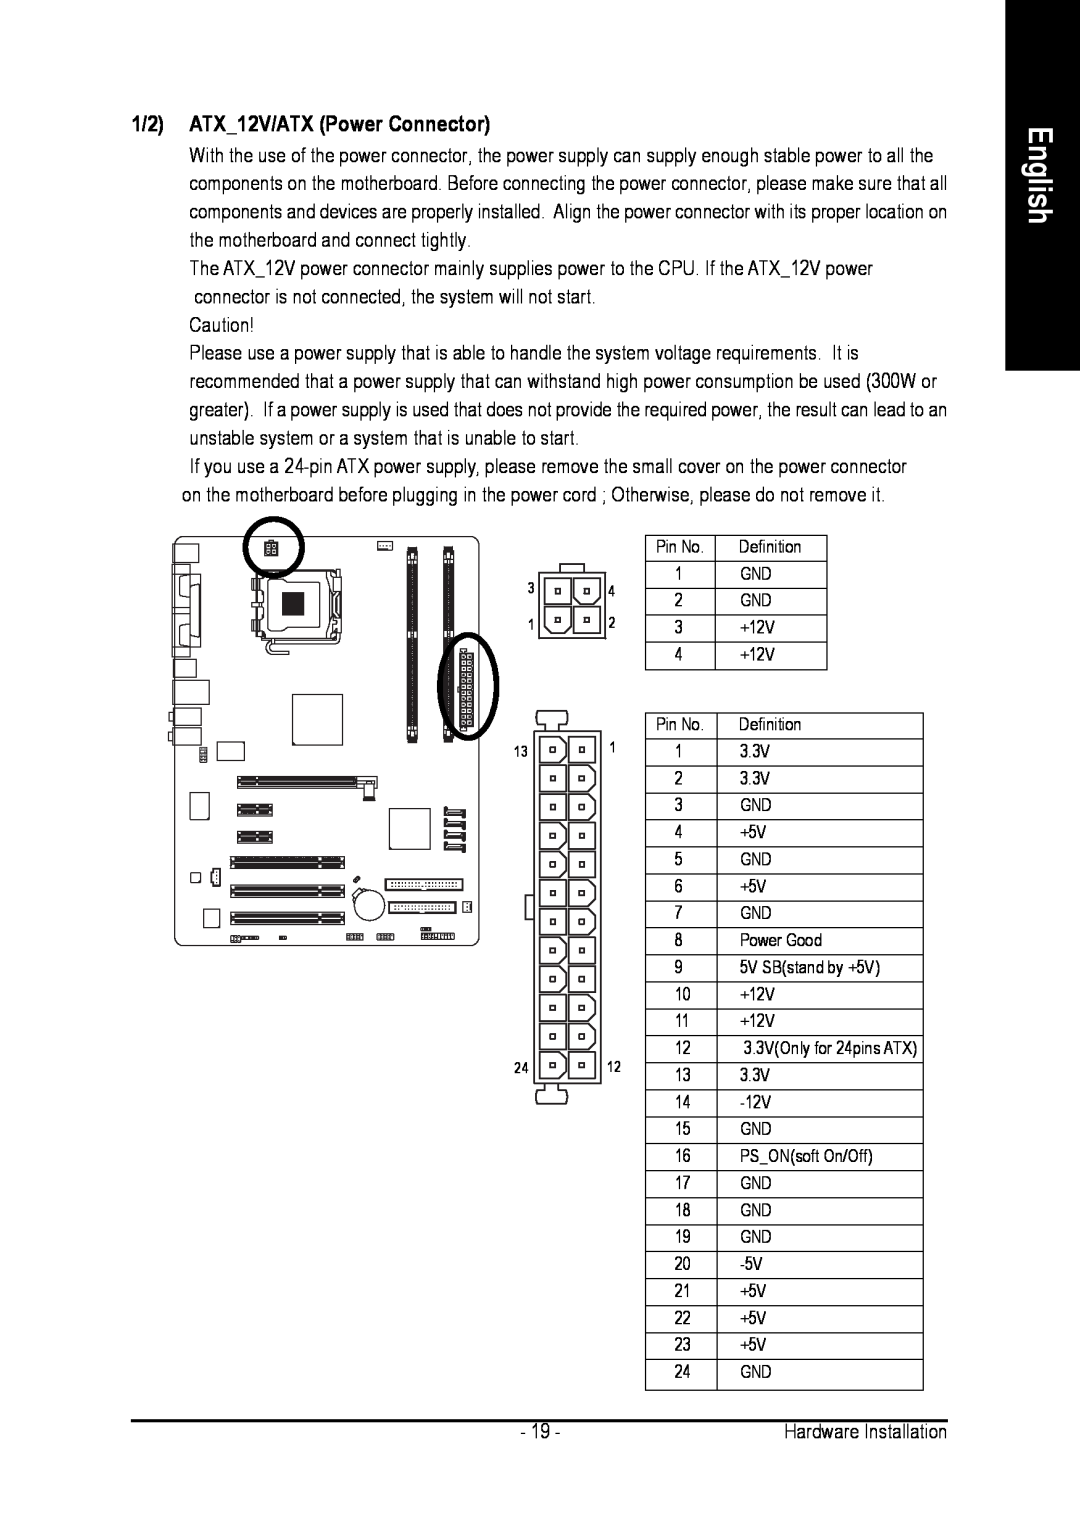 Intel GA-8I915PL-G user manual 1/2 ATX12V/ATX Power Connector, English 